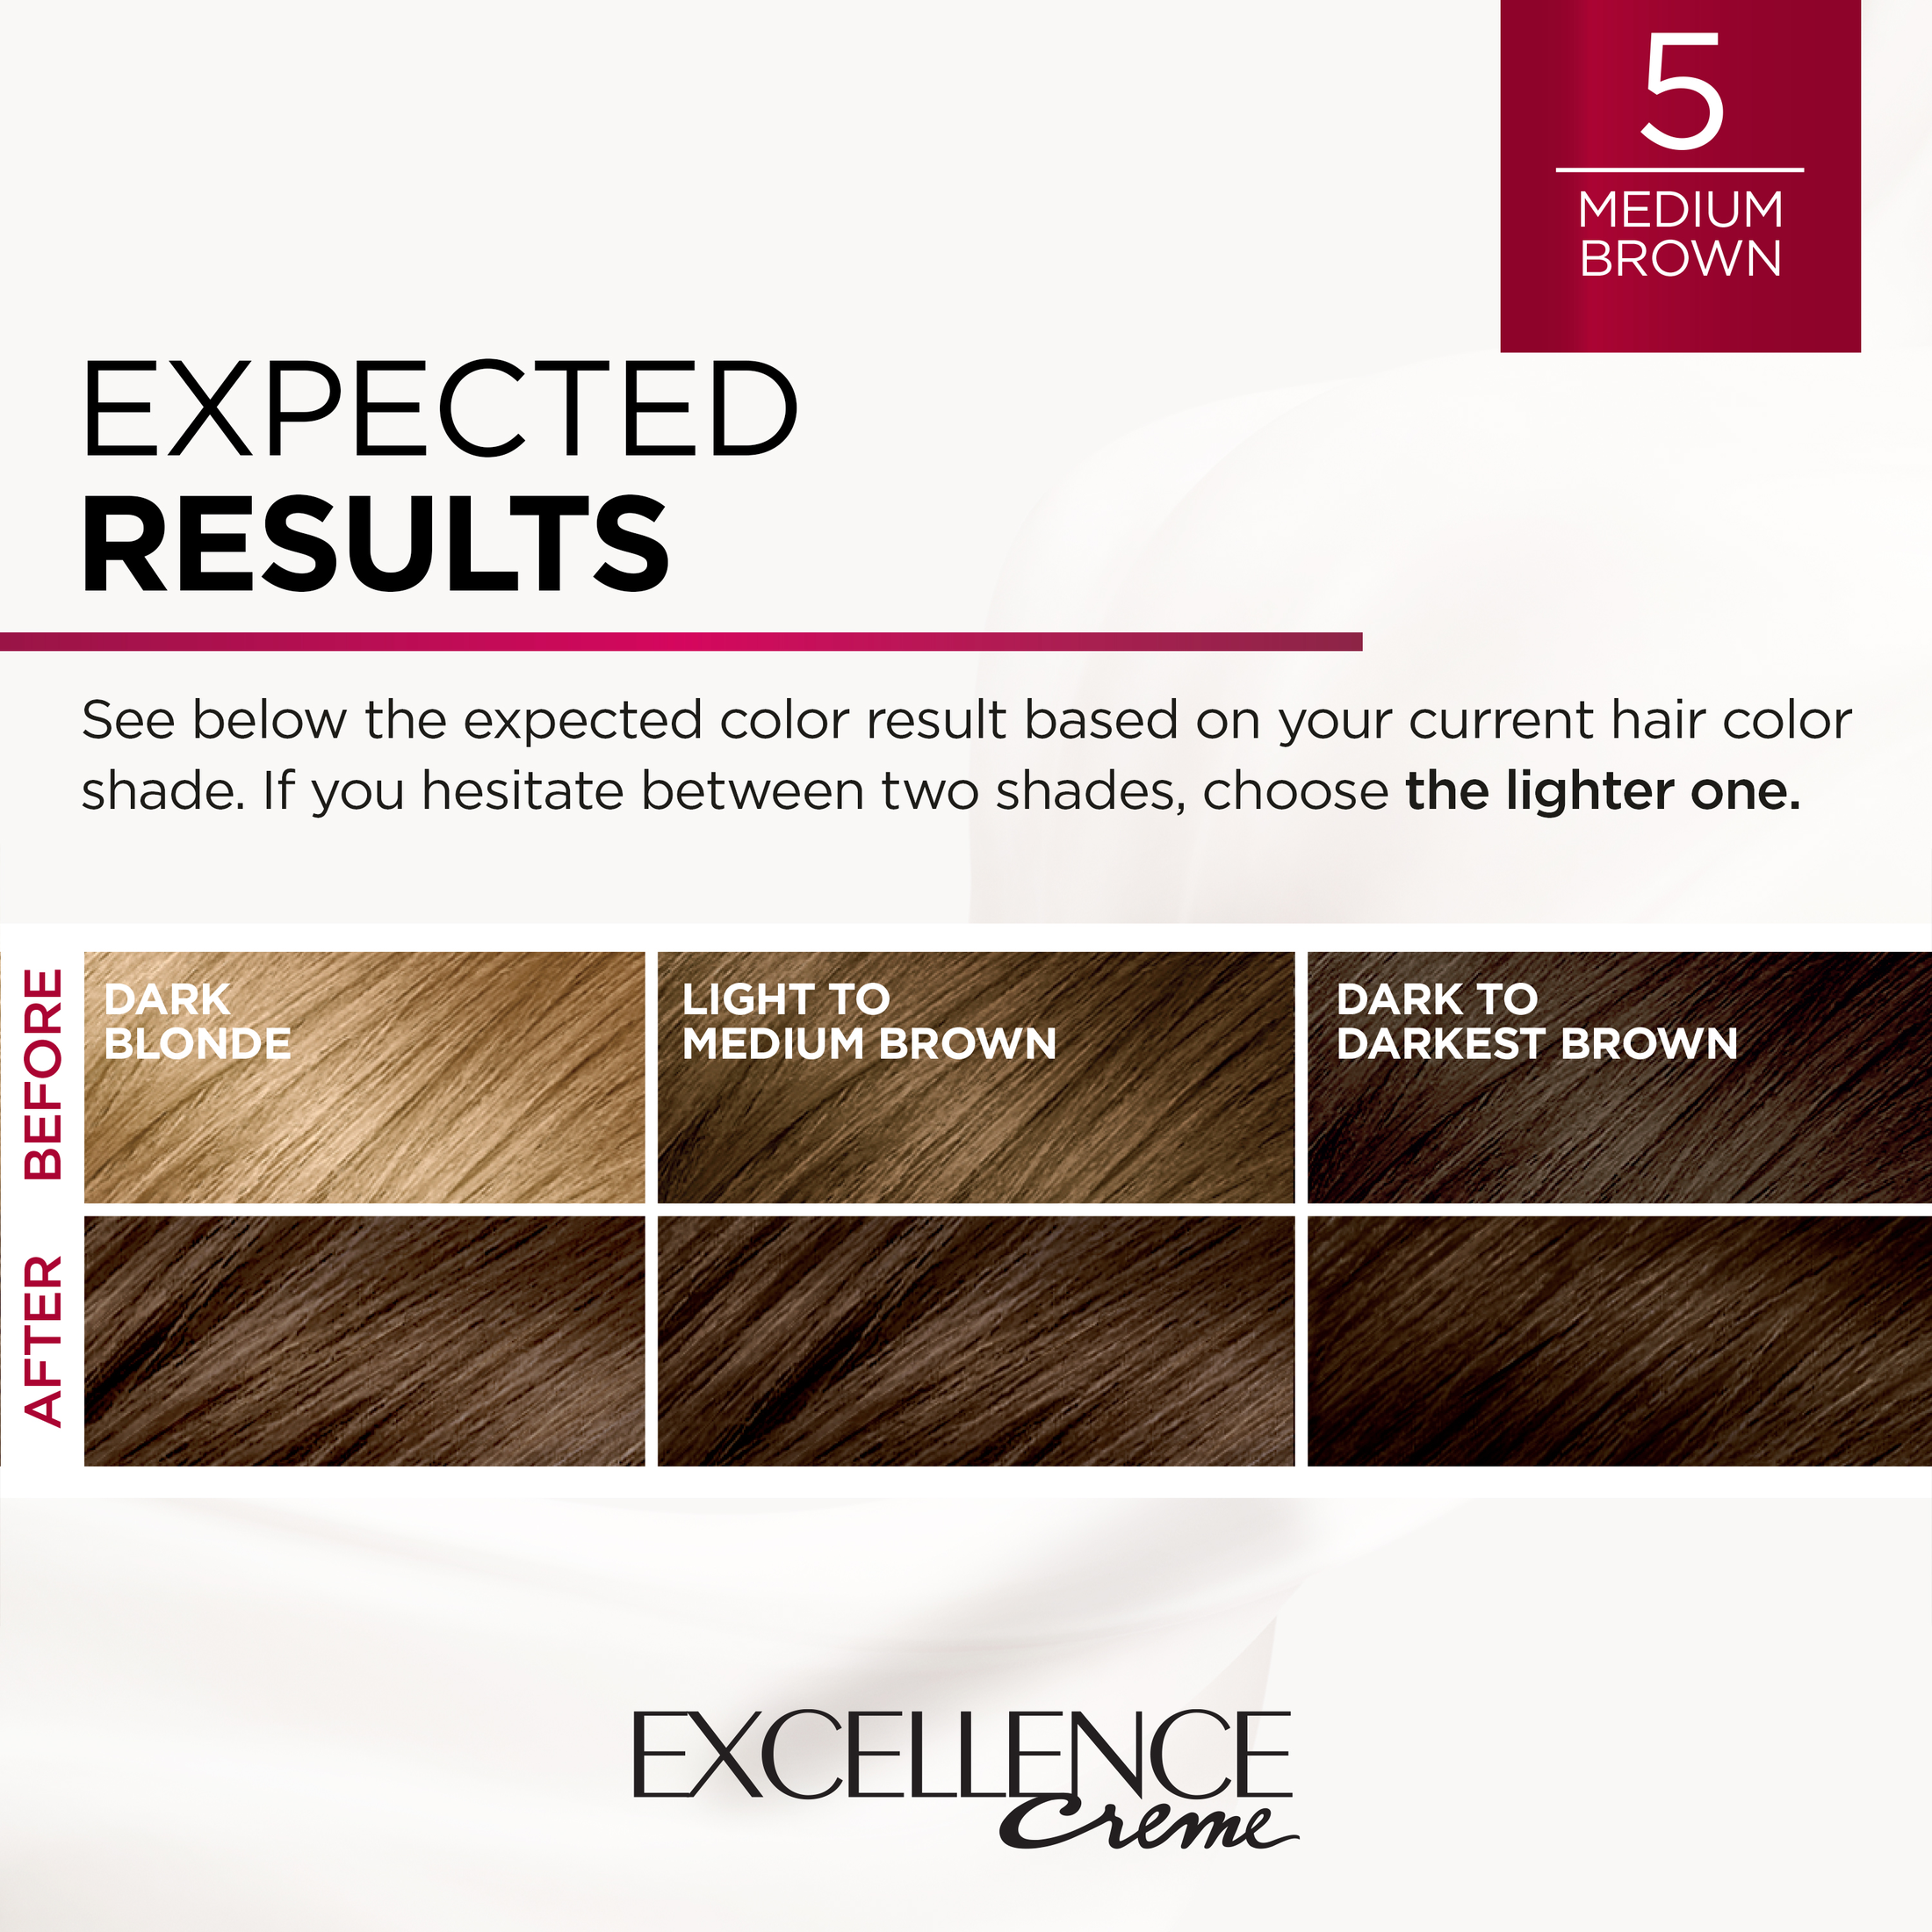 L'Oreal Paris Excellence Creme Permanent Hair Color, 5 Medium Brown - image 5 of 8